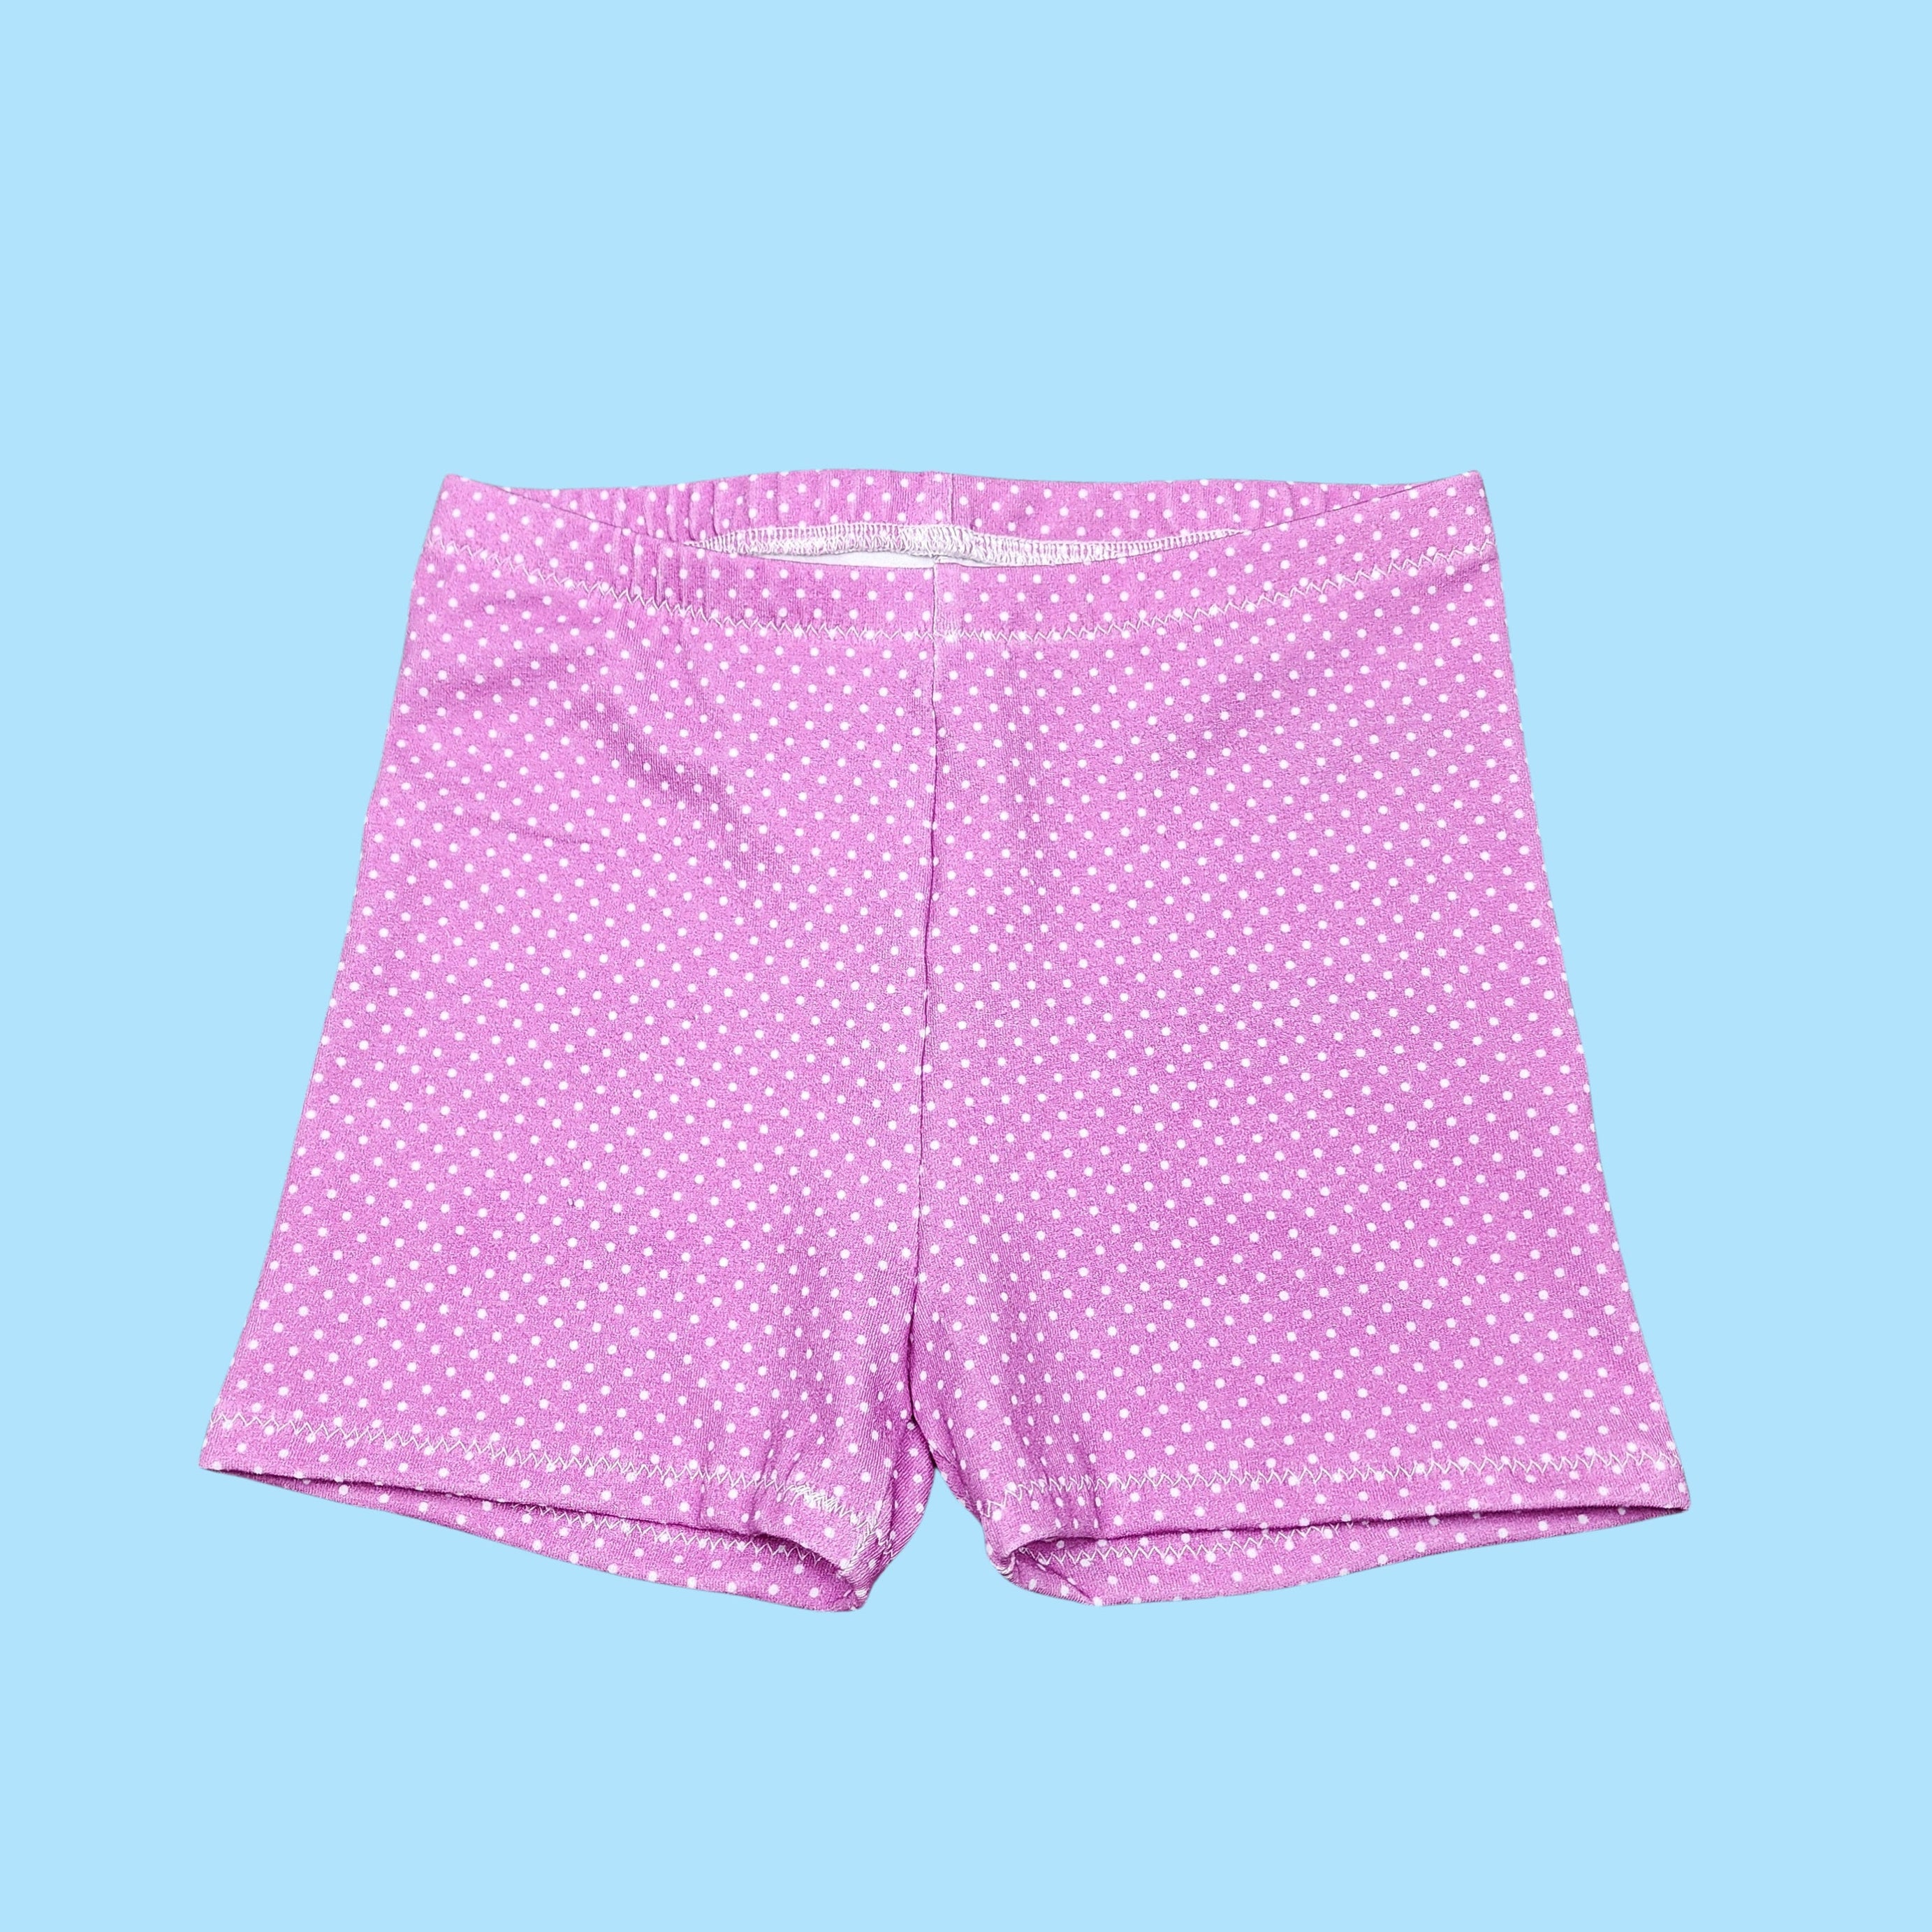 Purple Polka Dot Bike Shorts for Girls